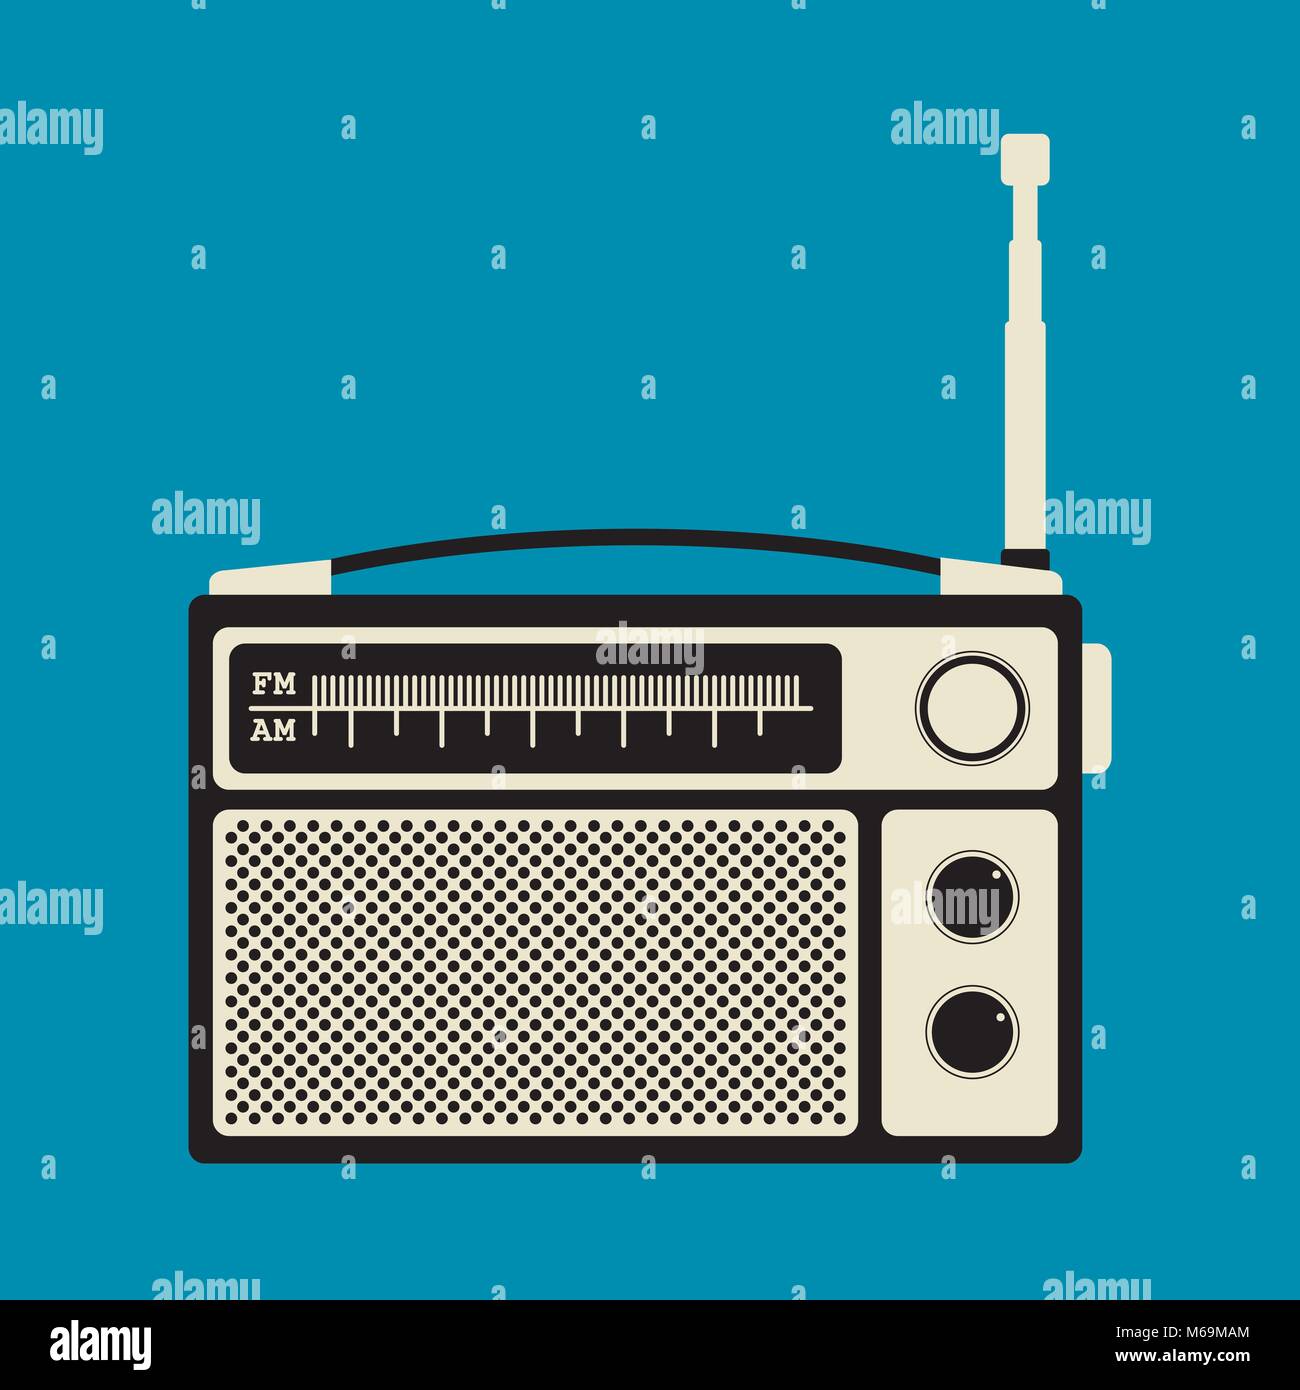 Radio analogica Immagini Vettoriali Stock - Alamy